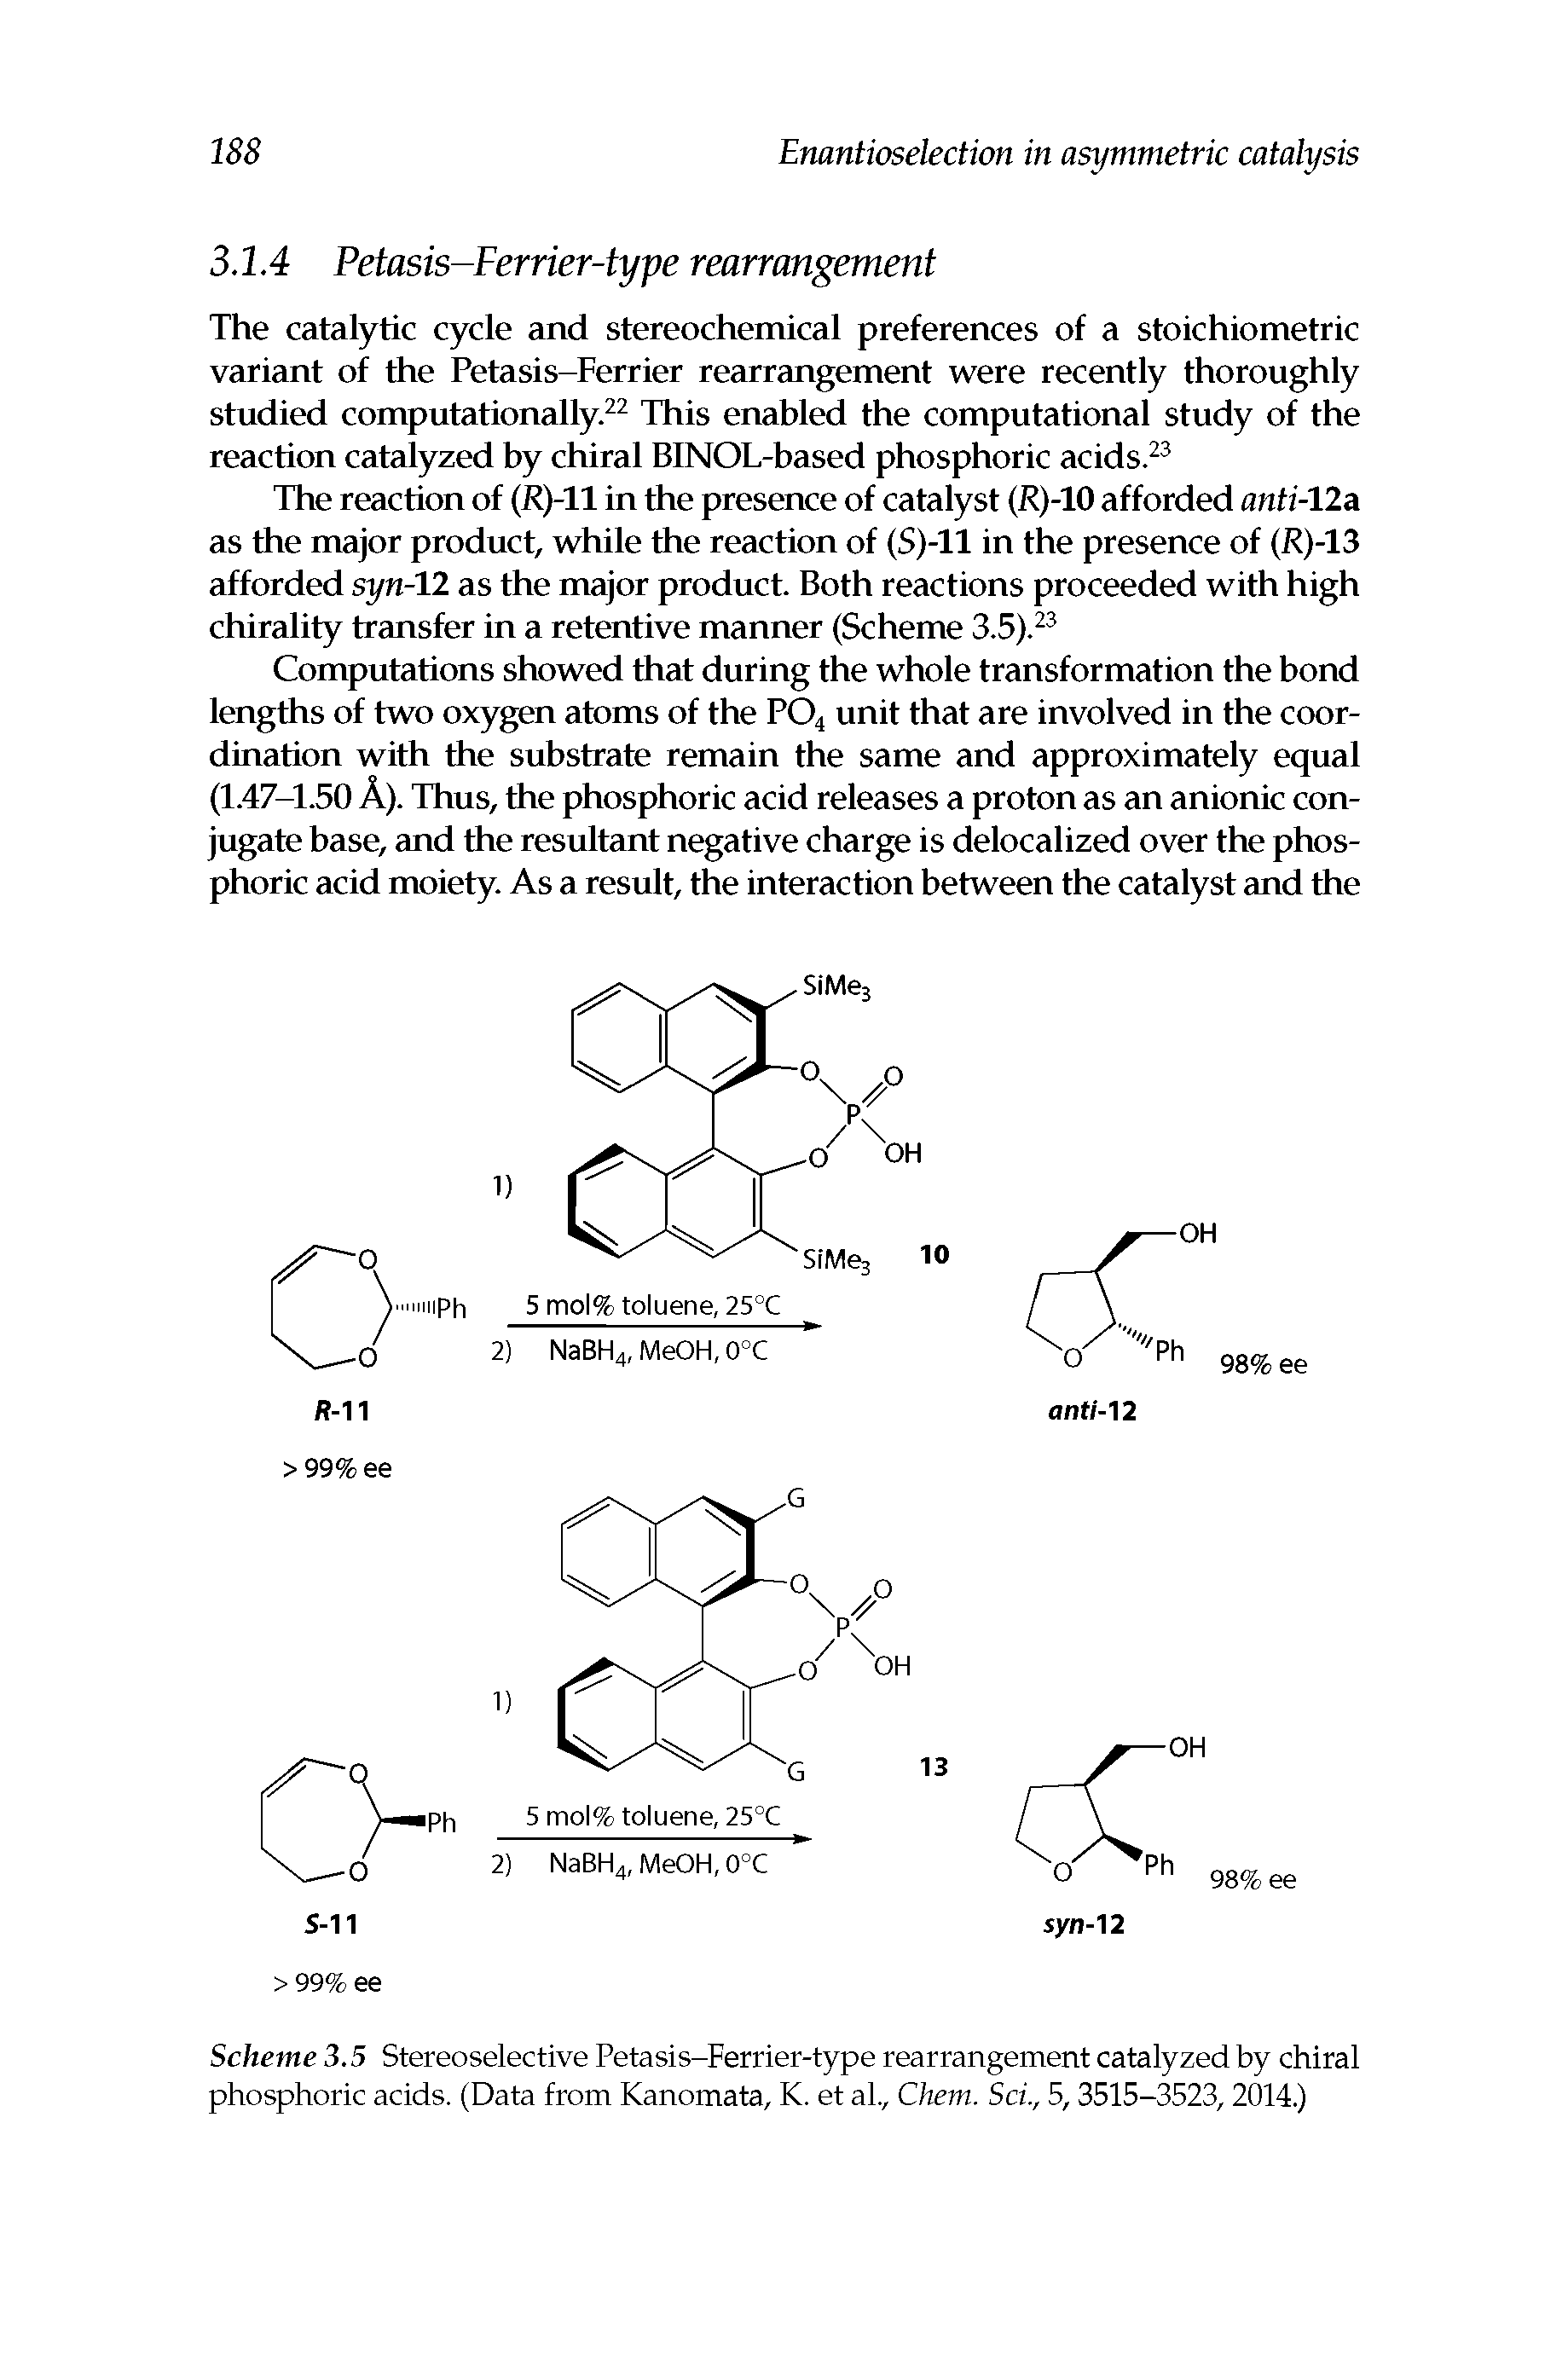 Scheme 3.5 Stereoselective Petasis-Ferrier-type rearrangement catalyzed by chiral phosphoric acids. (Data from Kanomata, K. et al, Chem. Sci, 5,3515-3523,2014.)...